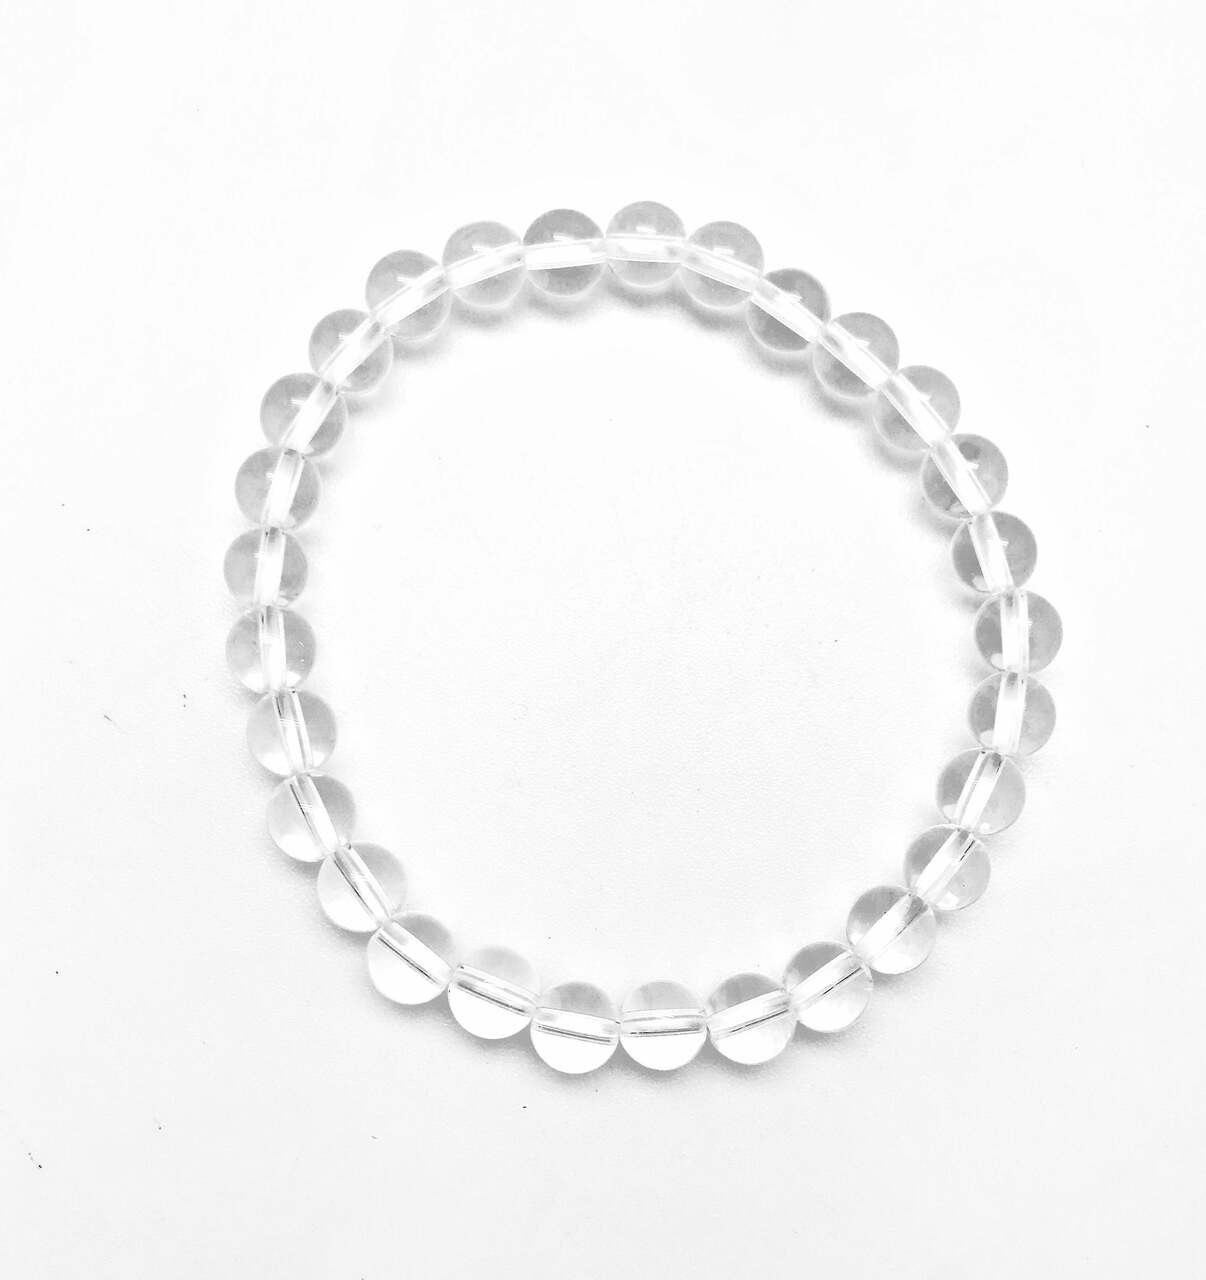 clear quartz crystal healing clear quartz stone clear quartz beads Clear quartz bead bracelet beaded bracelet clear quartz jewelry